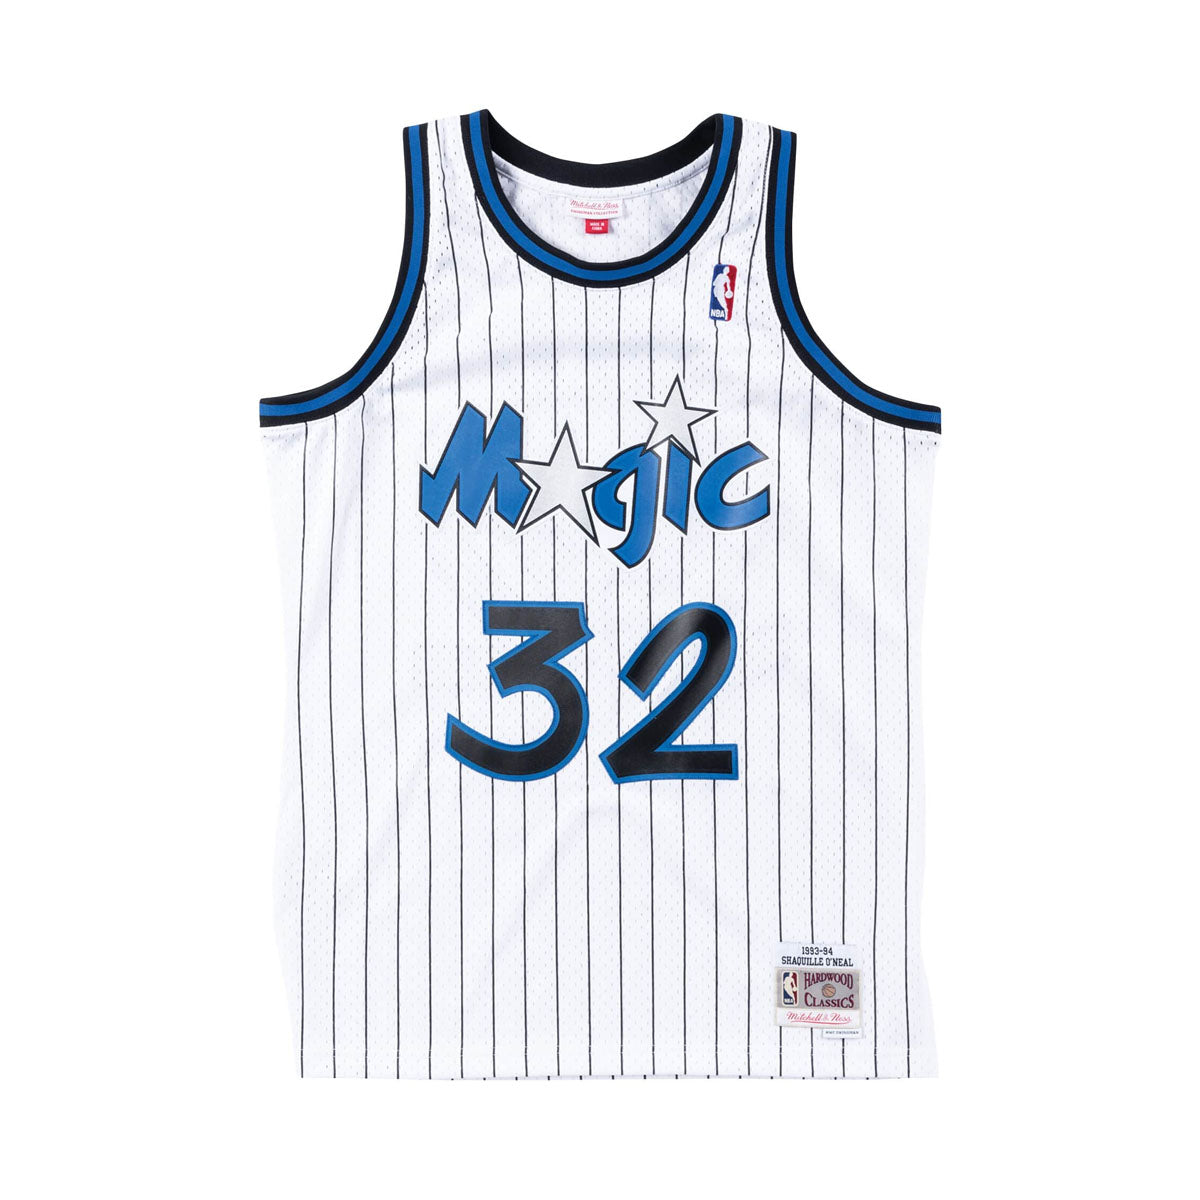 Shaq SHAQUILLE O'NEAL Jersey NBA basketballNBA tank shirt